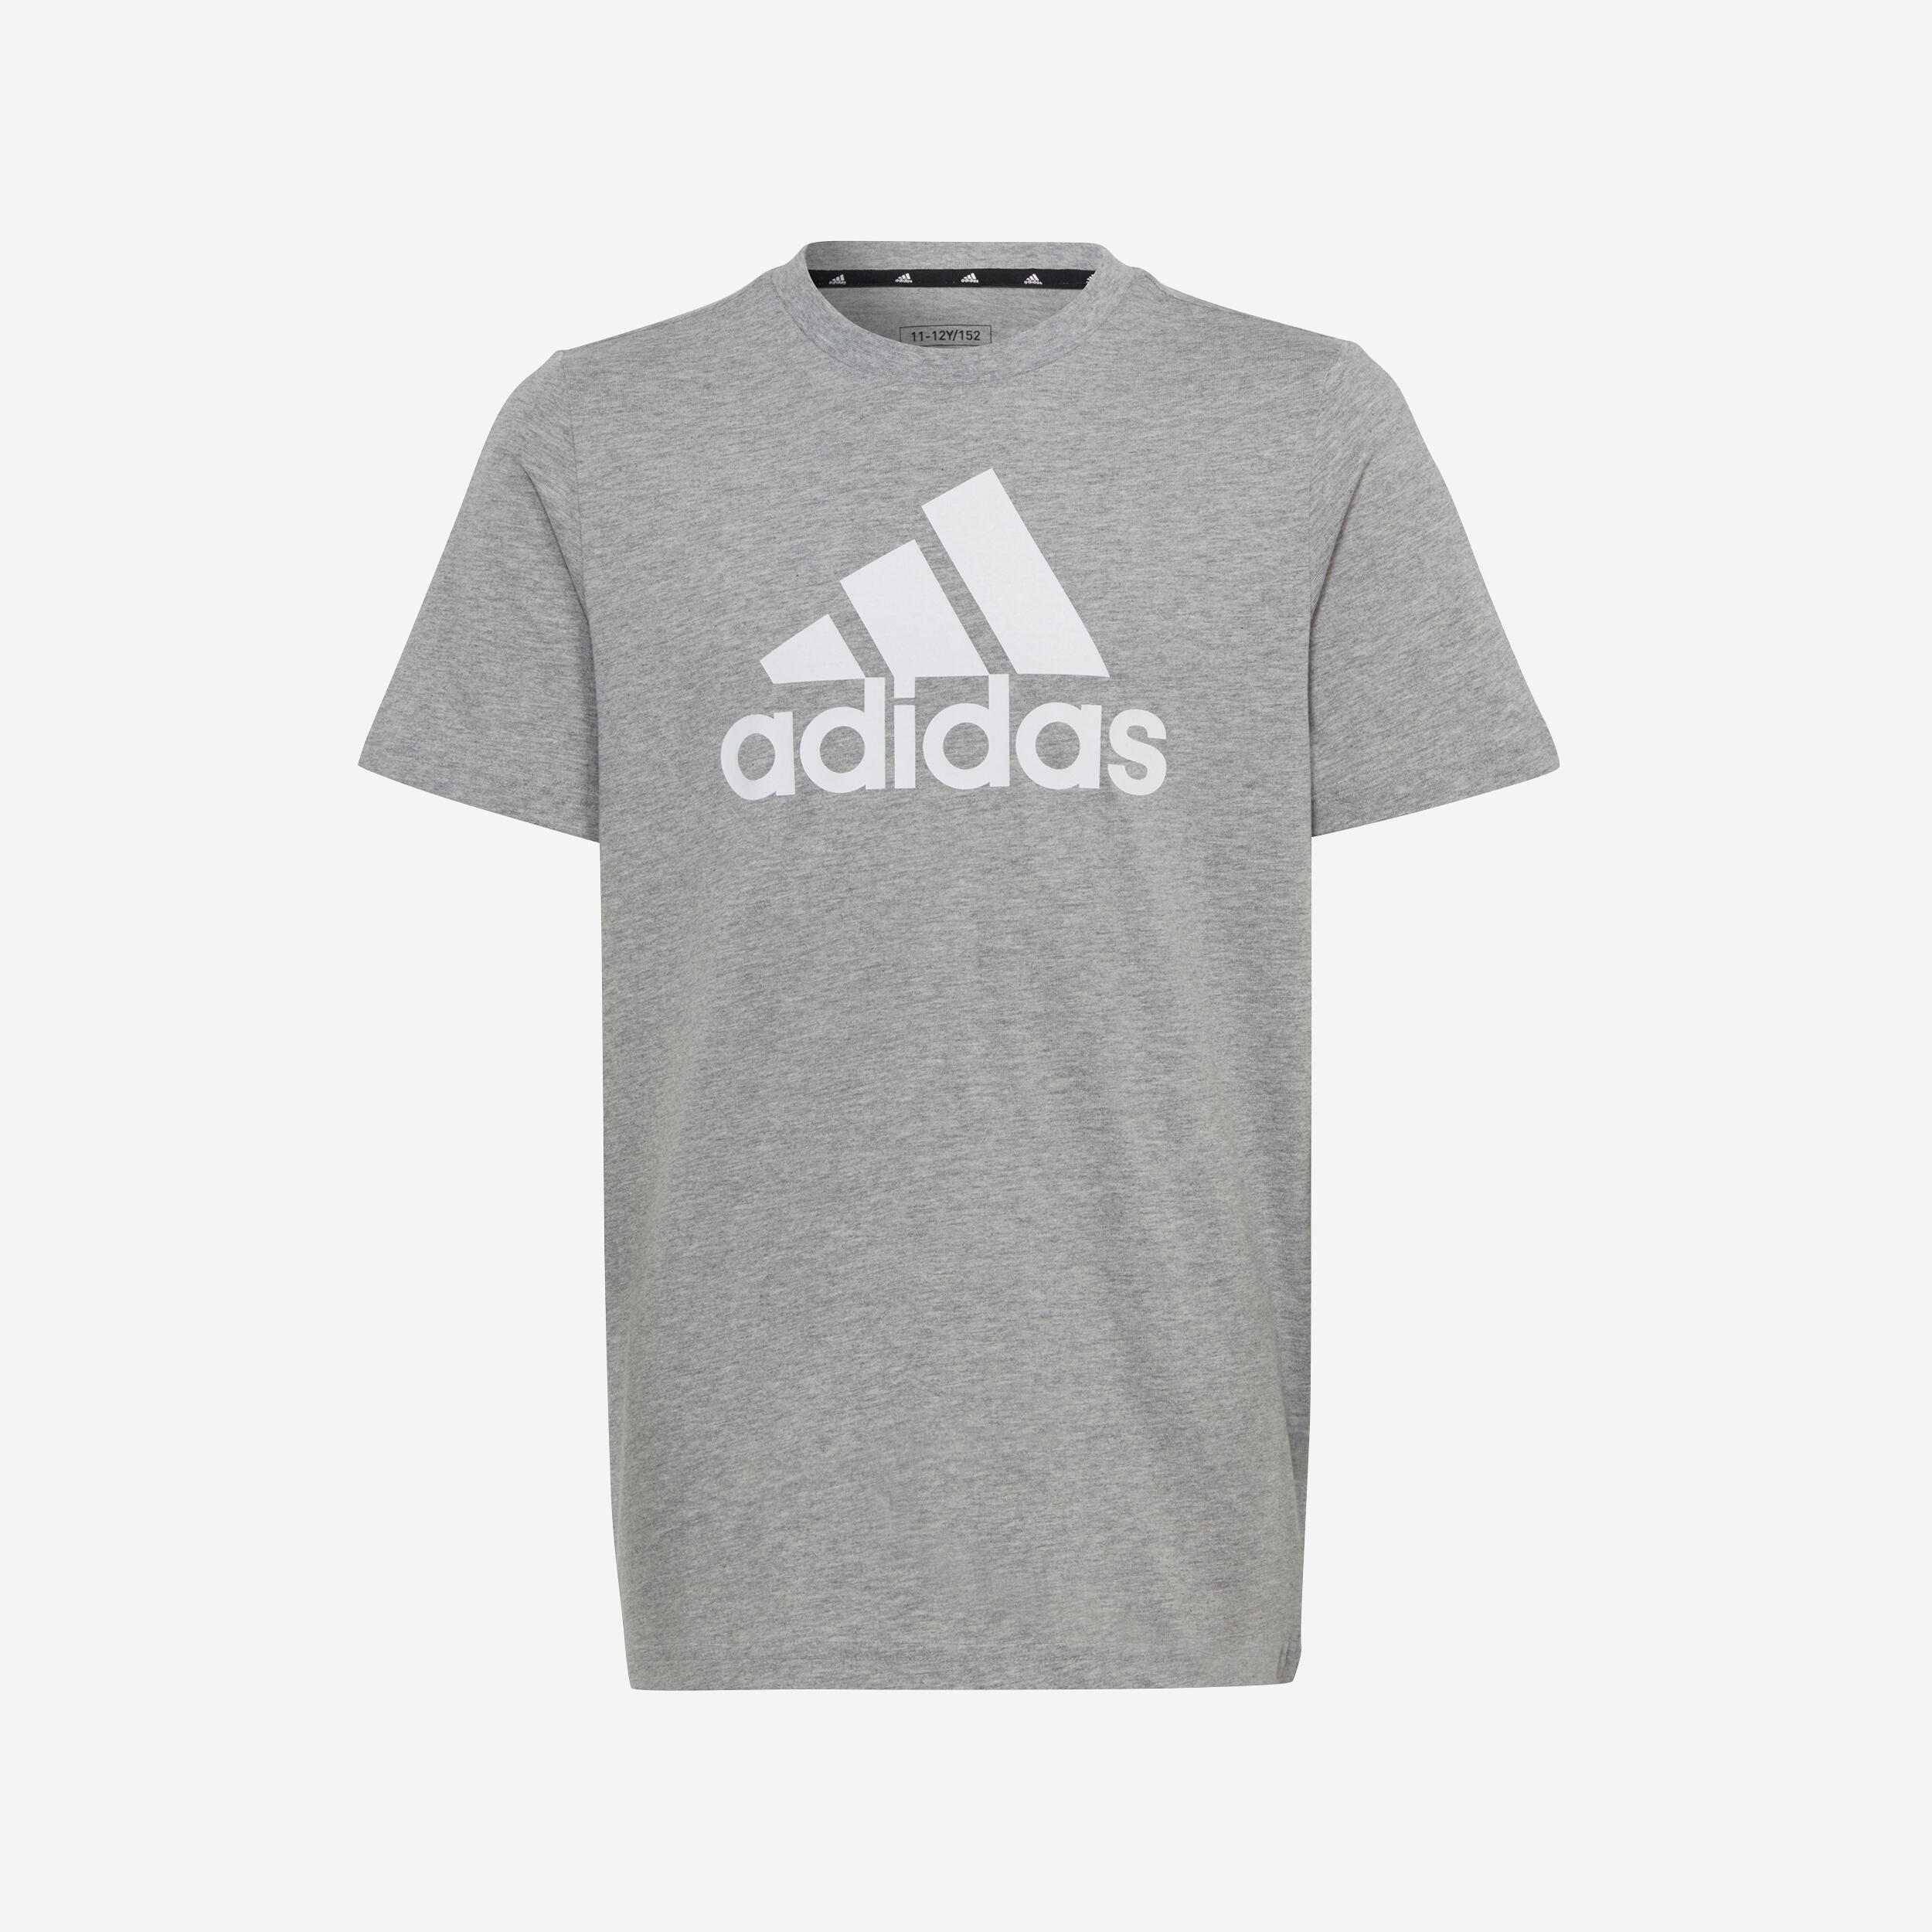 T-shirt Adidas Junior Grå/vit Stor Logga